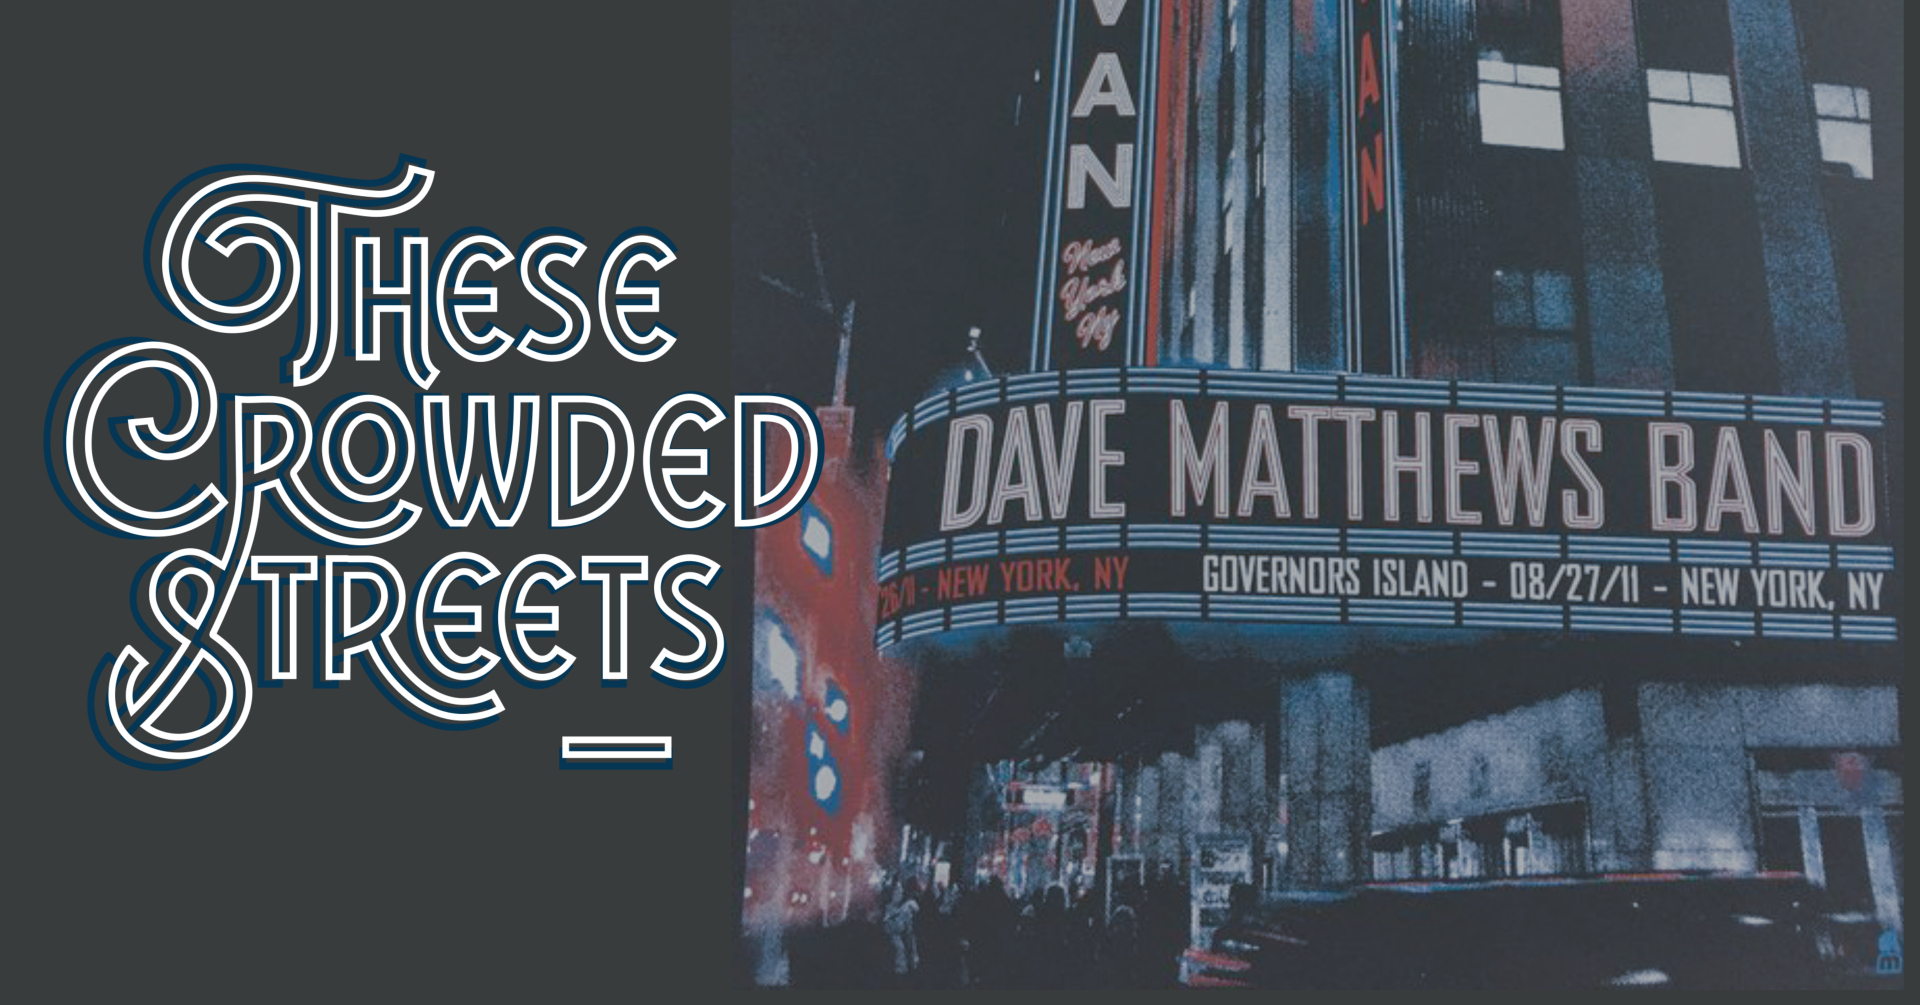 Dave Matthews Band Tribtue - These Crowded Streets, Atlanta, Georgia, United States